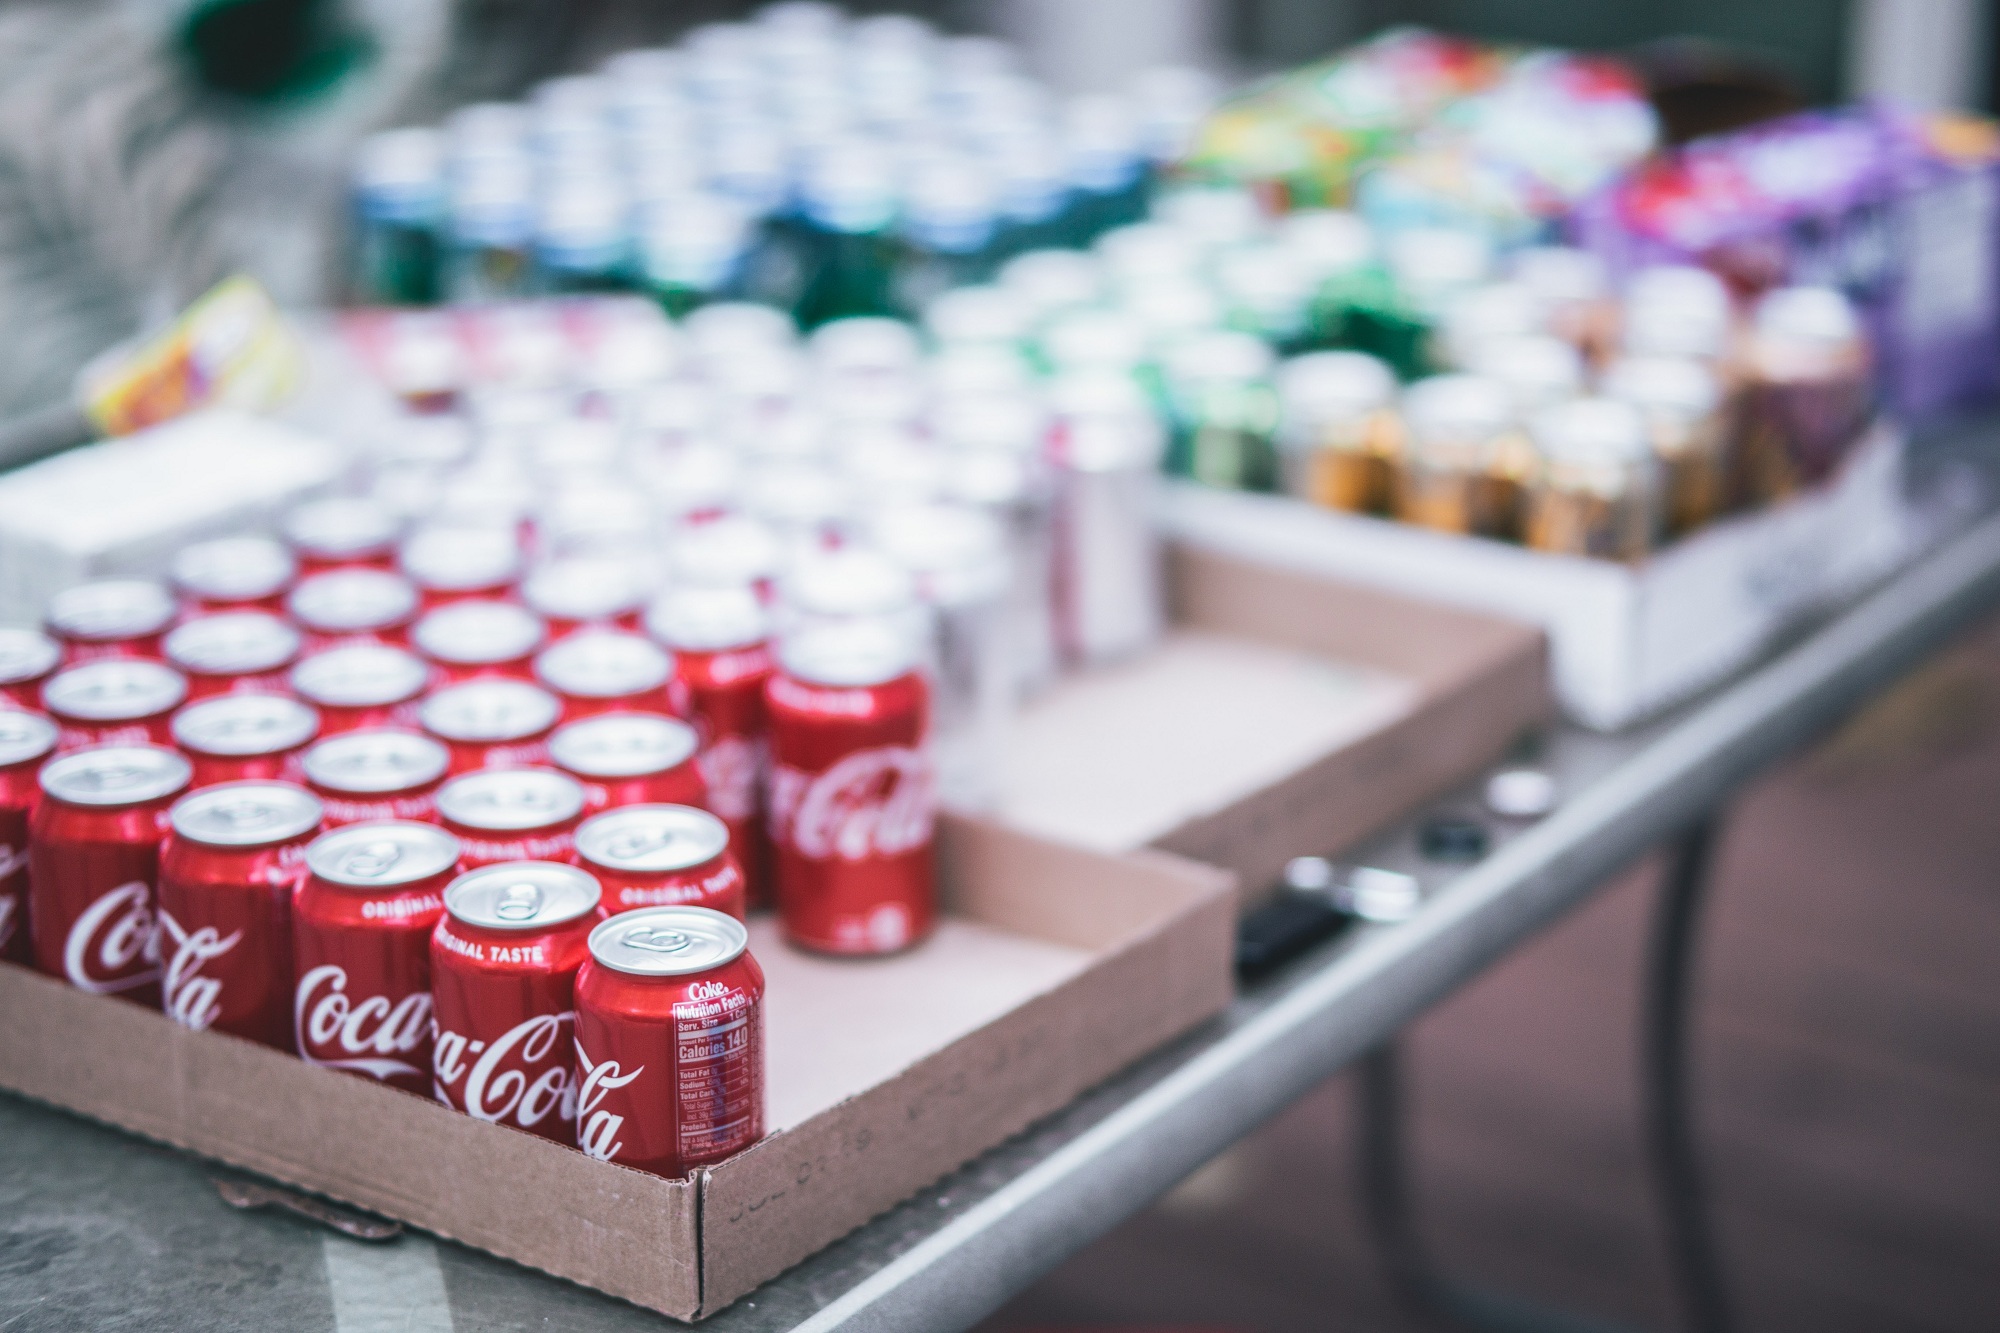 Coke, Pepsi, fanta, Soda is the worlds most recognizable beverage